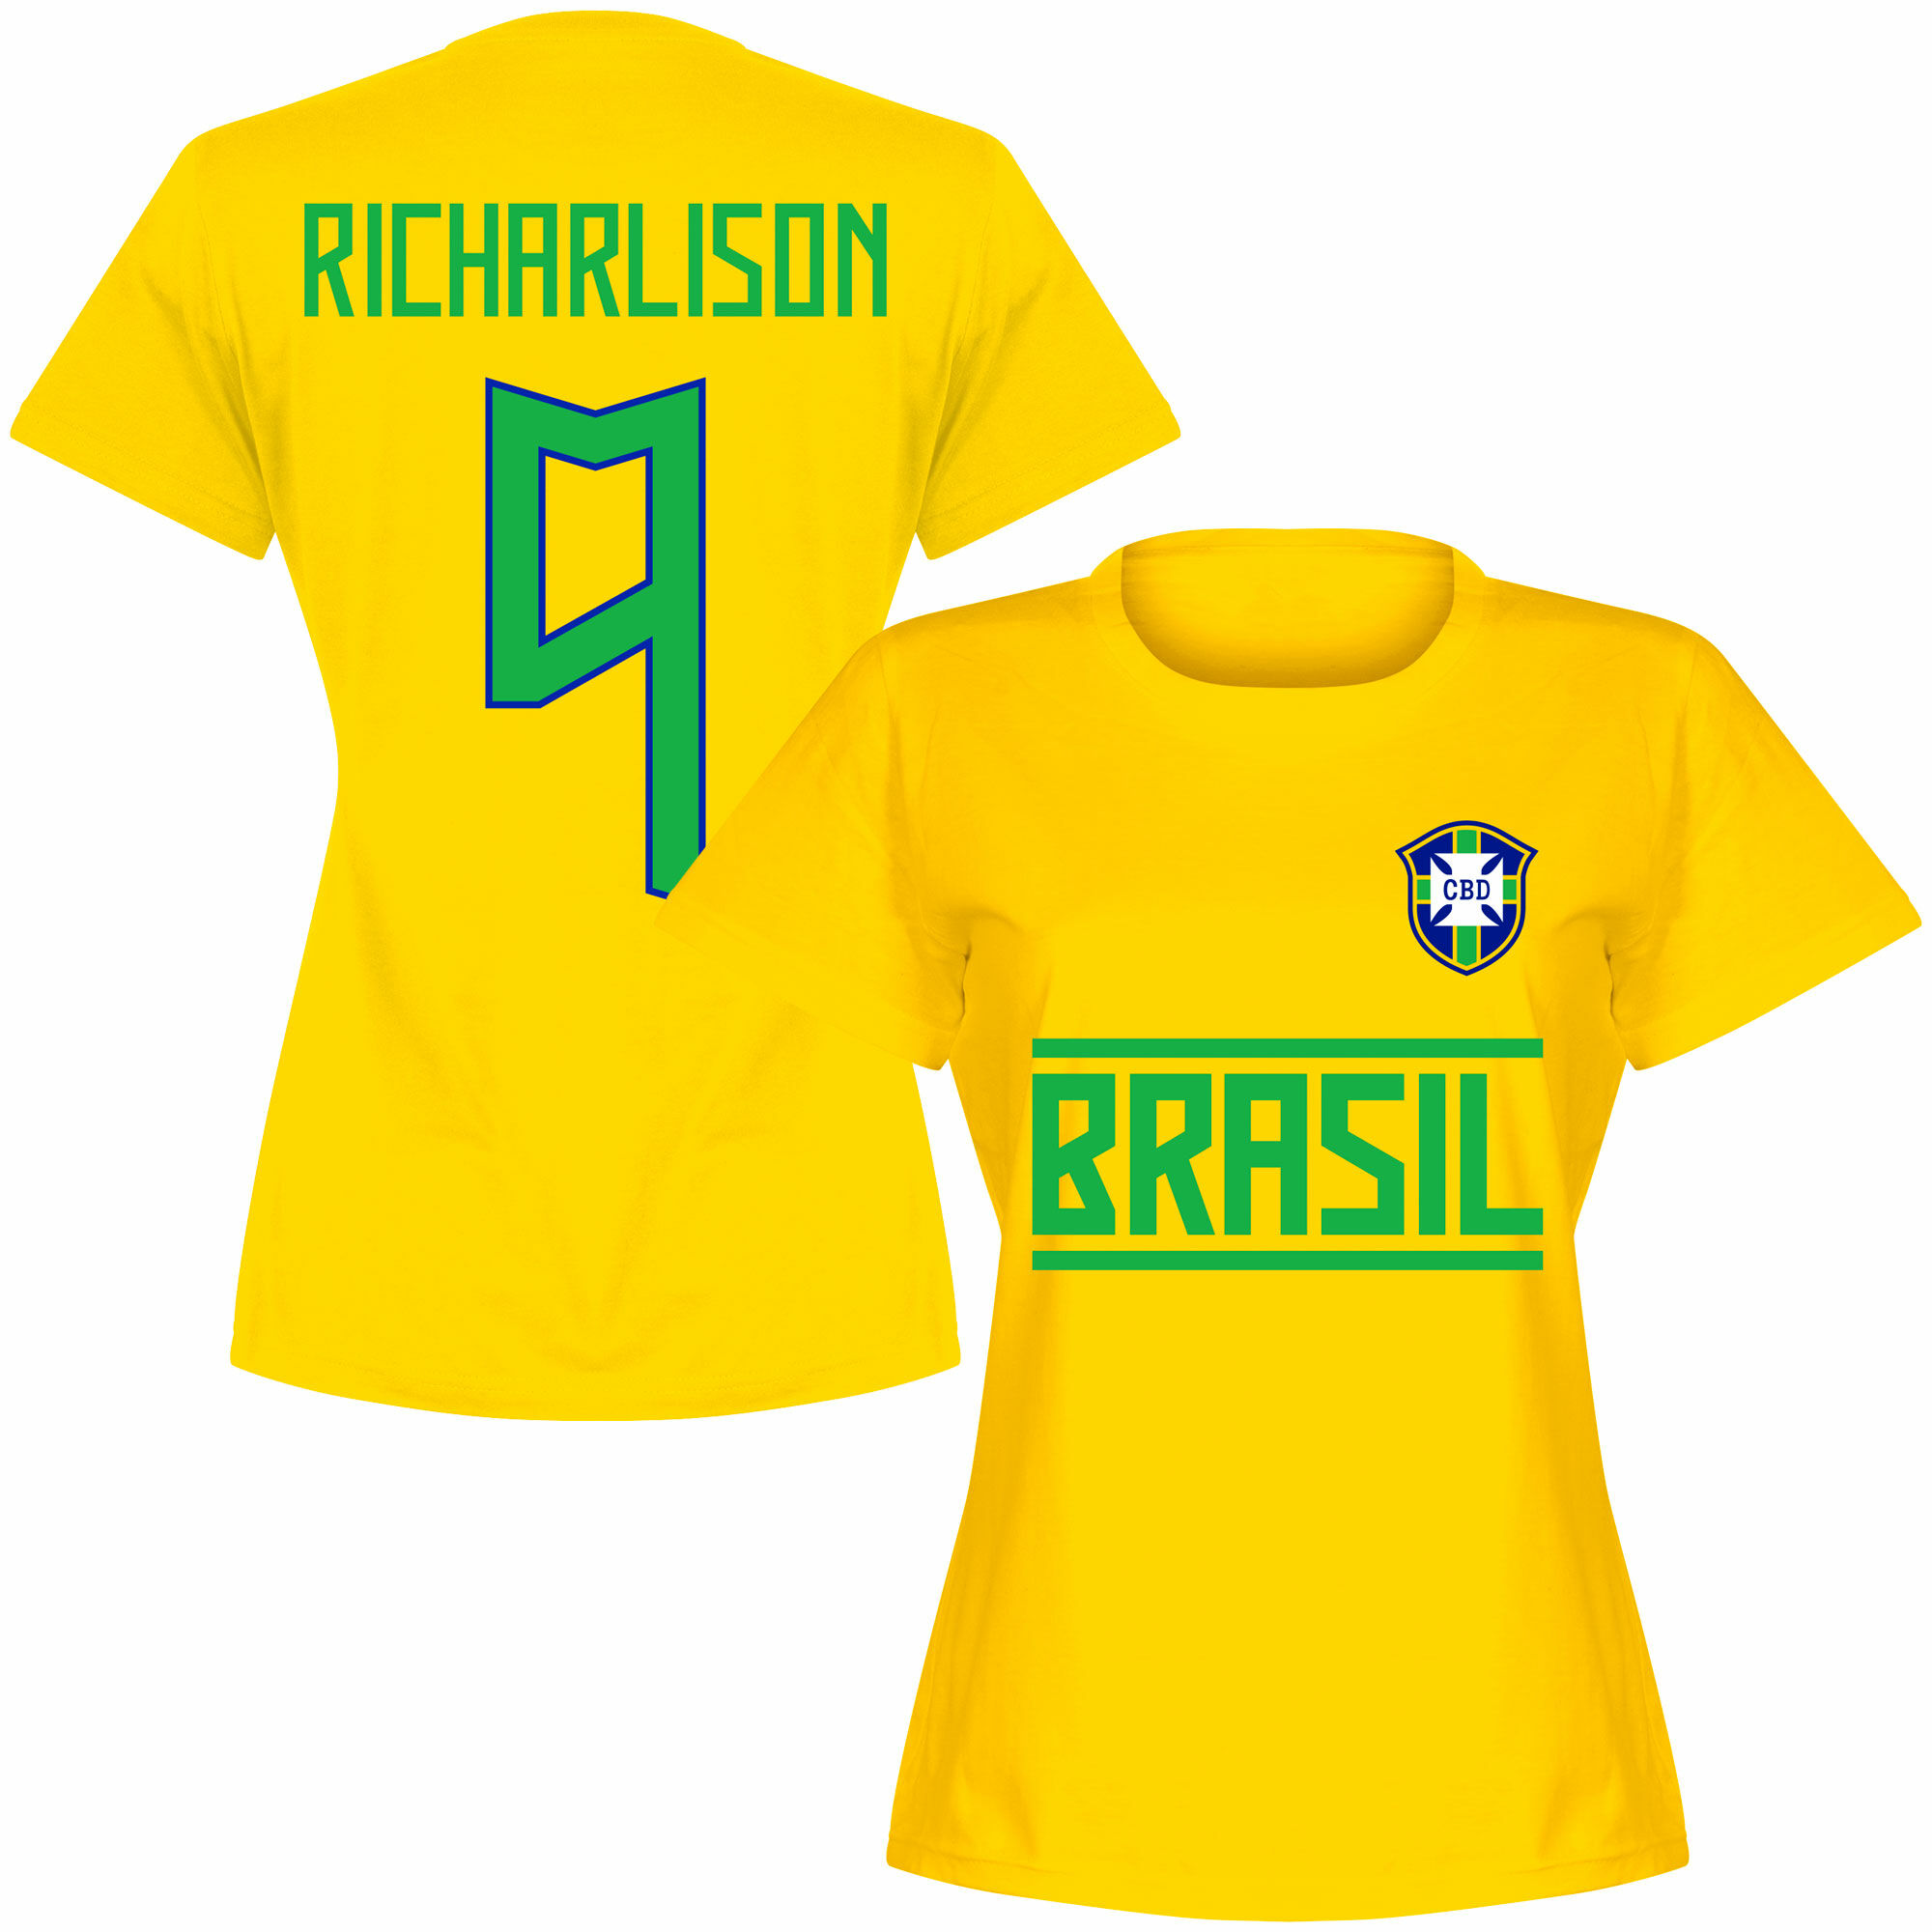 Brazílie - Tričko dámské - Richarlison, žluté, číslo 9